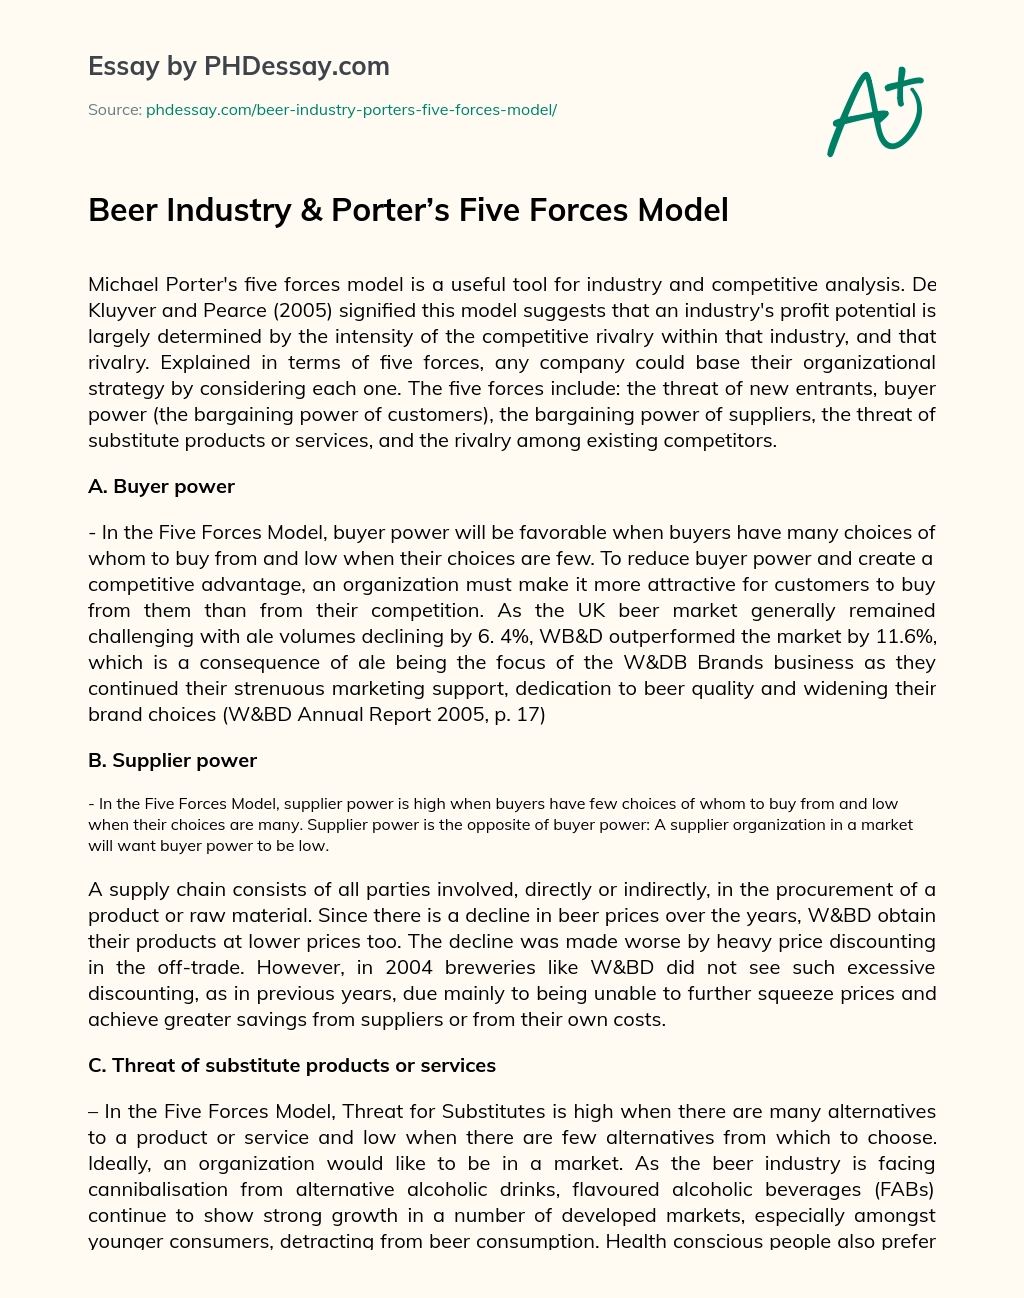 Beer Industry & Porter’s Five Forces Model essay